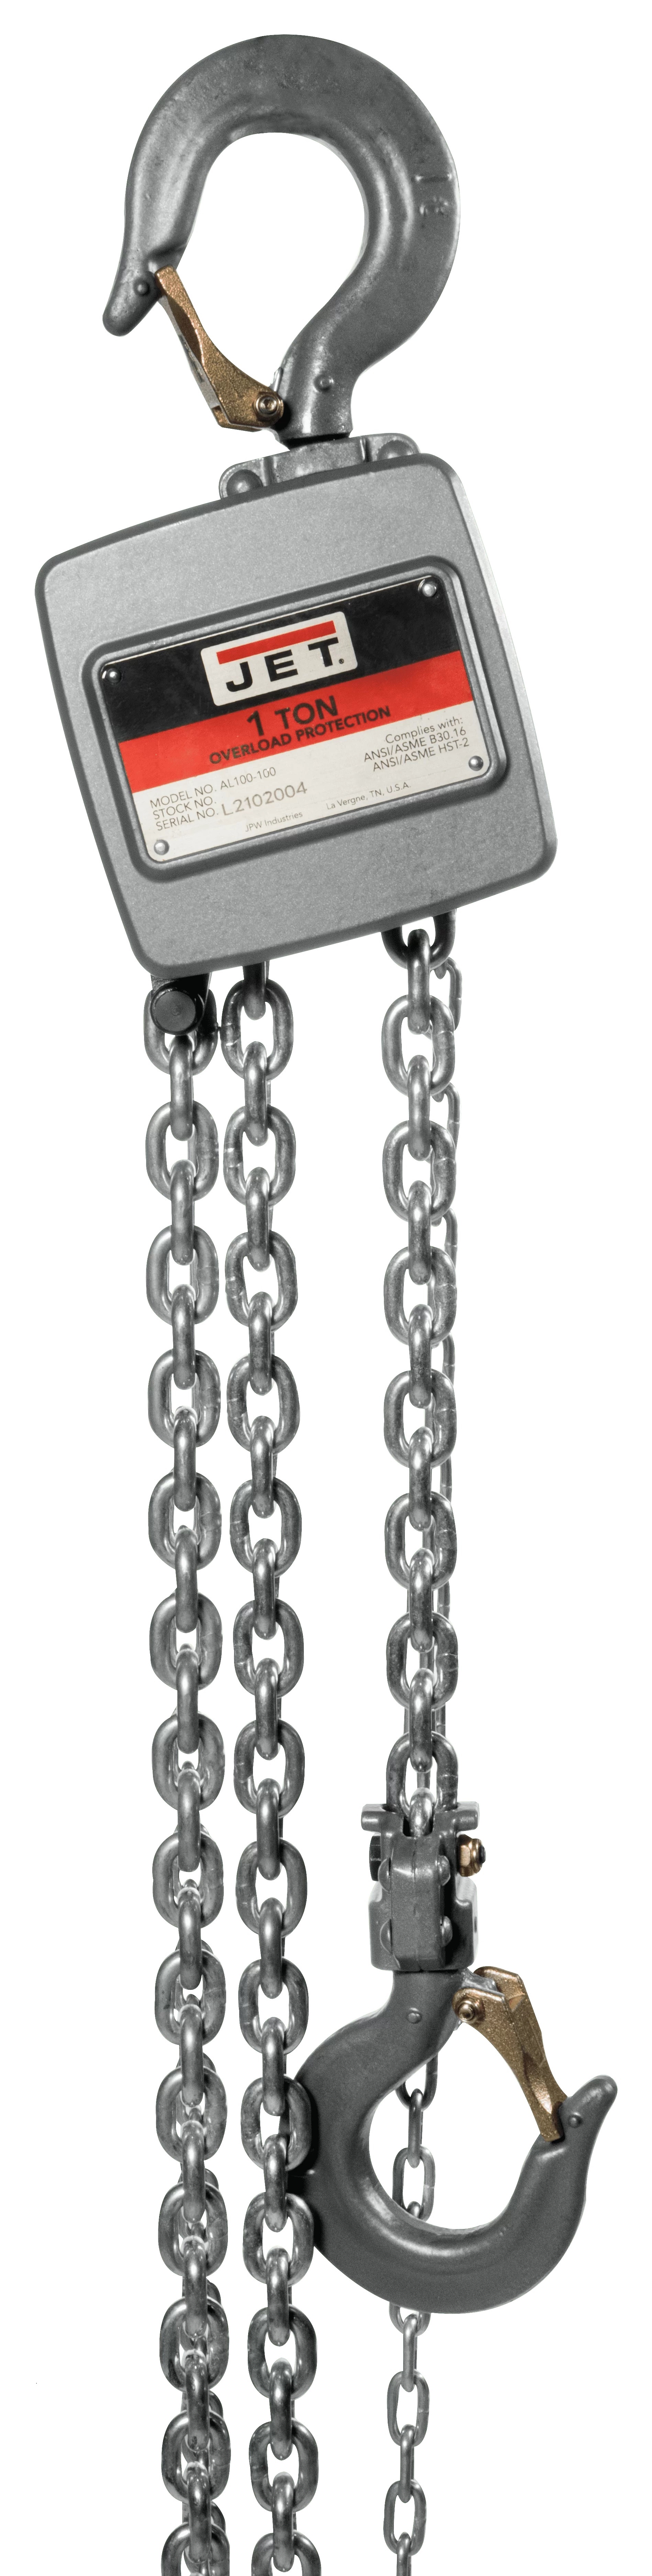 AL100-100-20 1 Ton Aluminum Hand Chain Hoist with 20ft of Lift